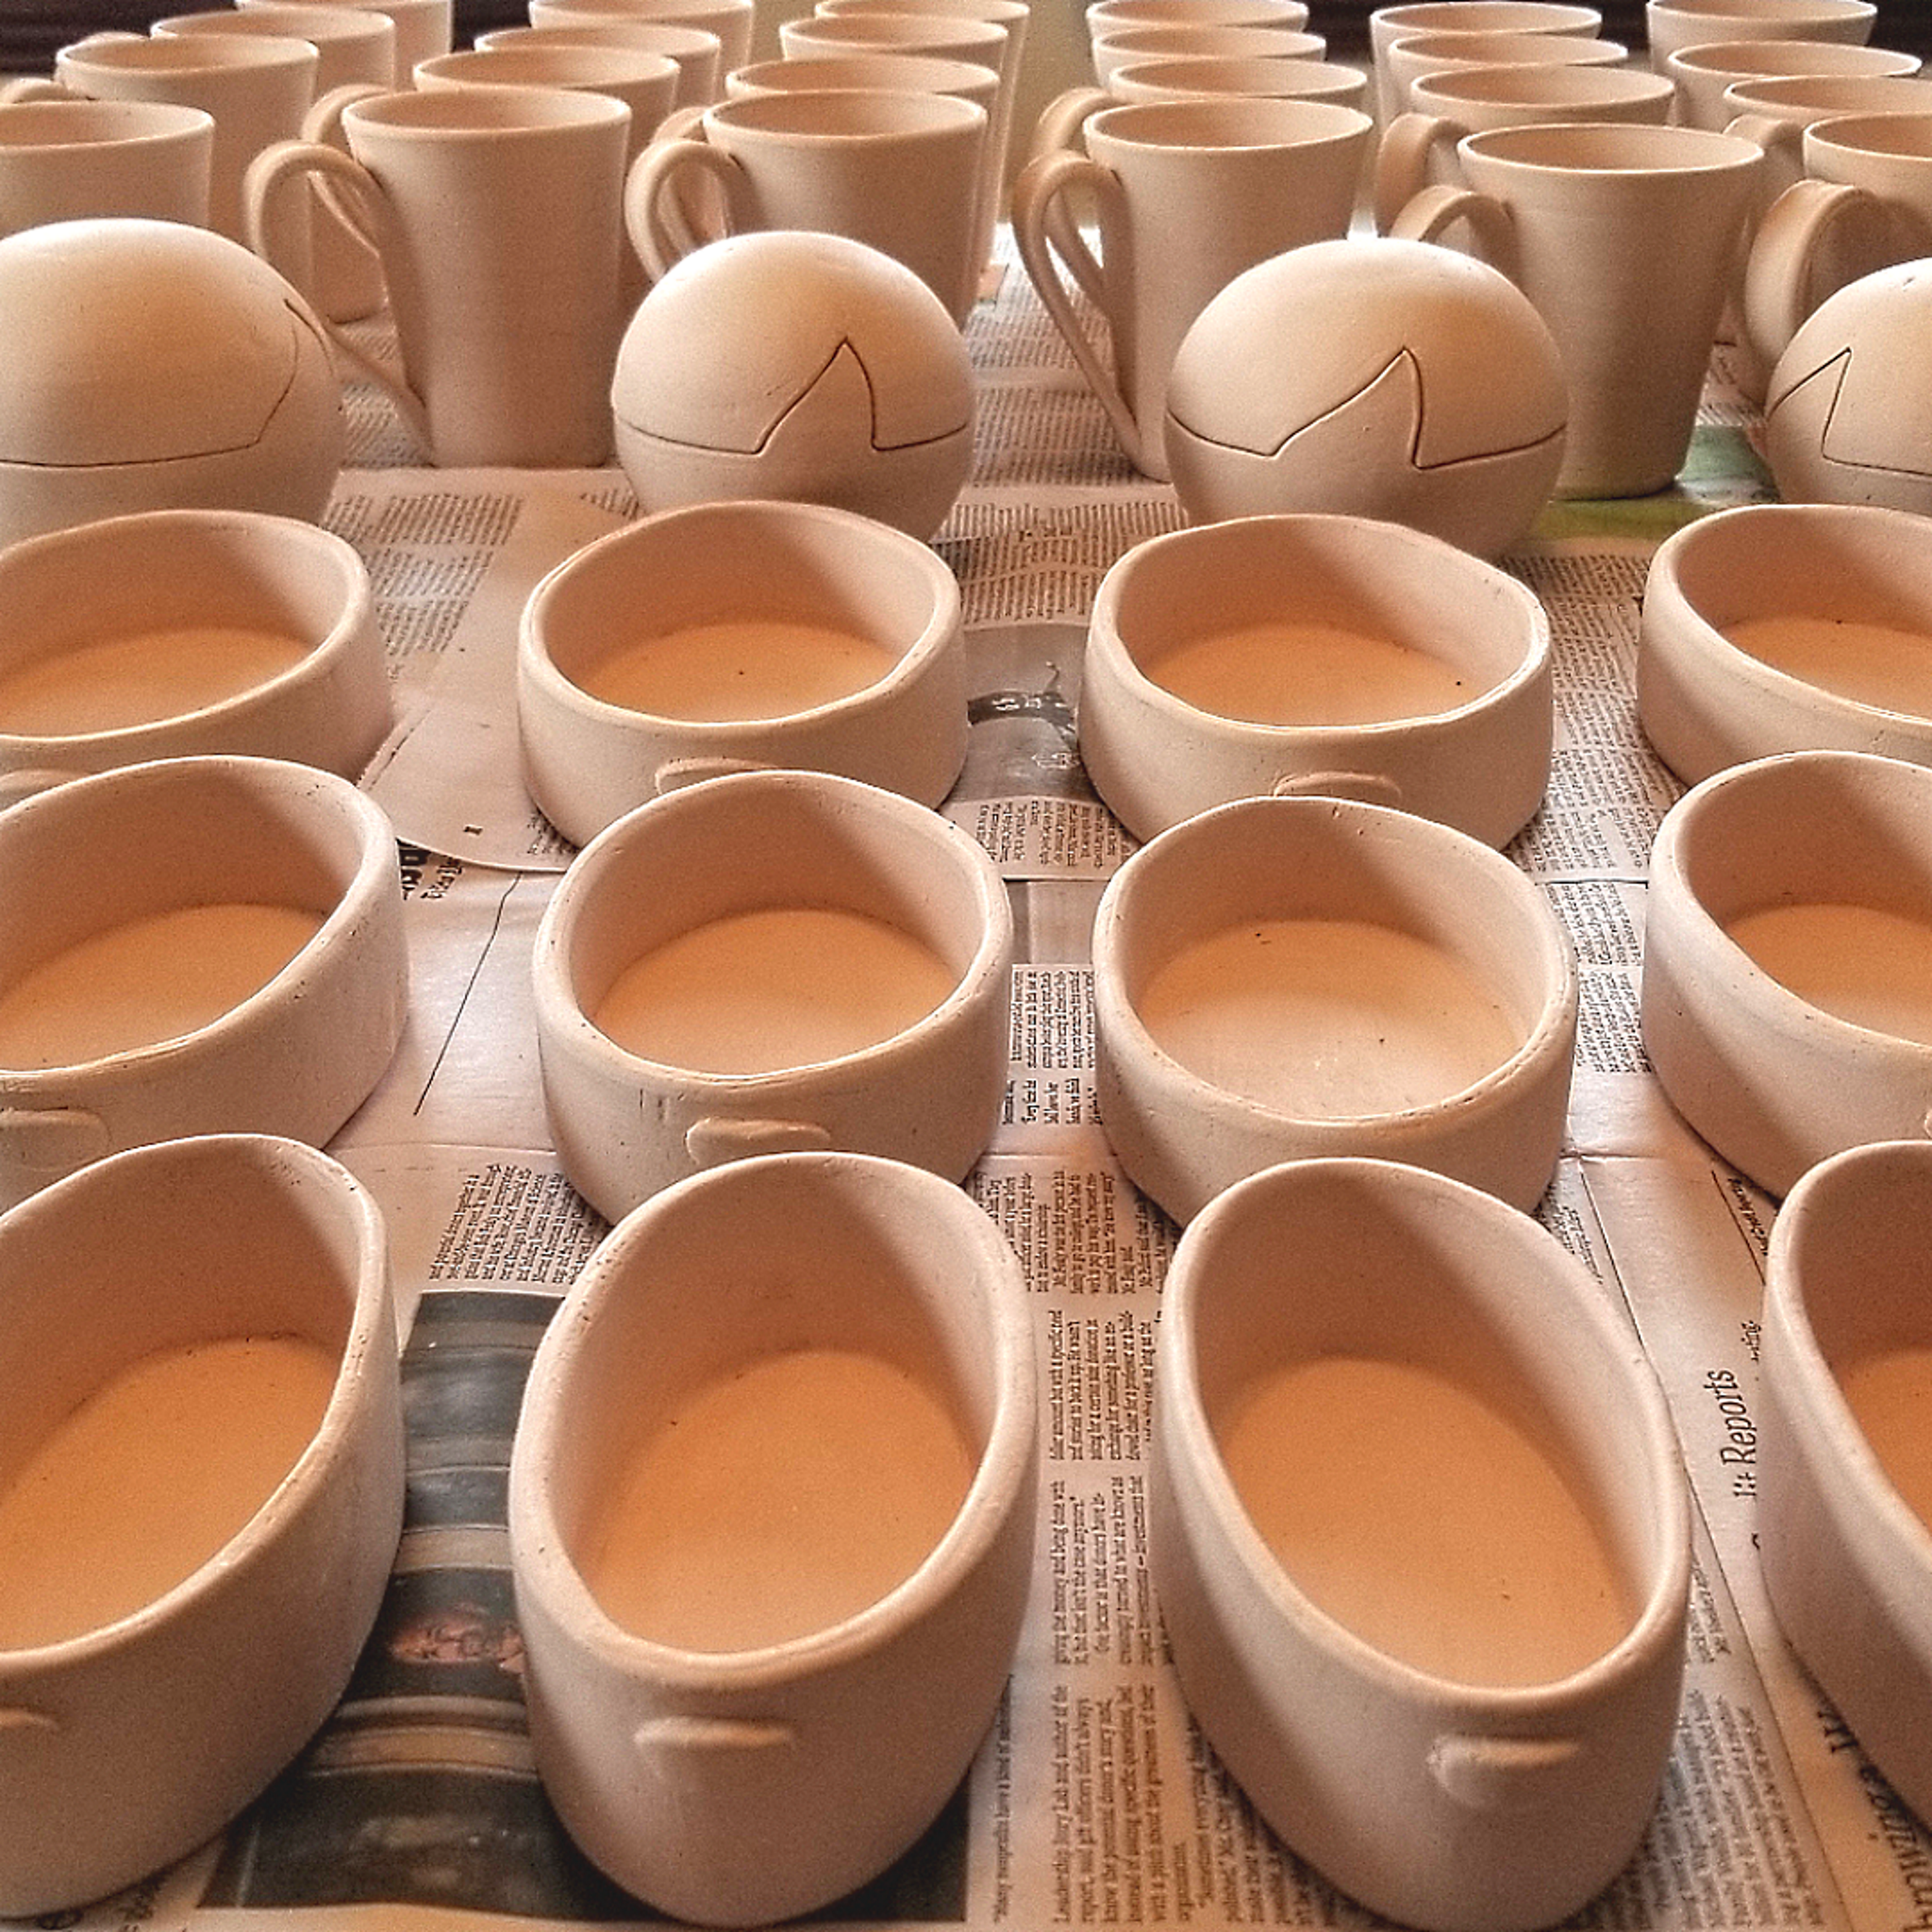 Bisqued stoneware bowls and mugs